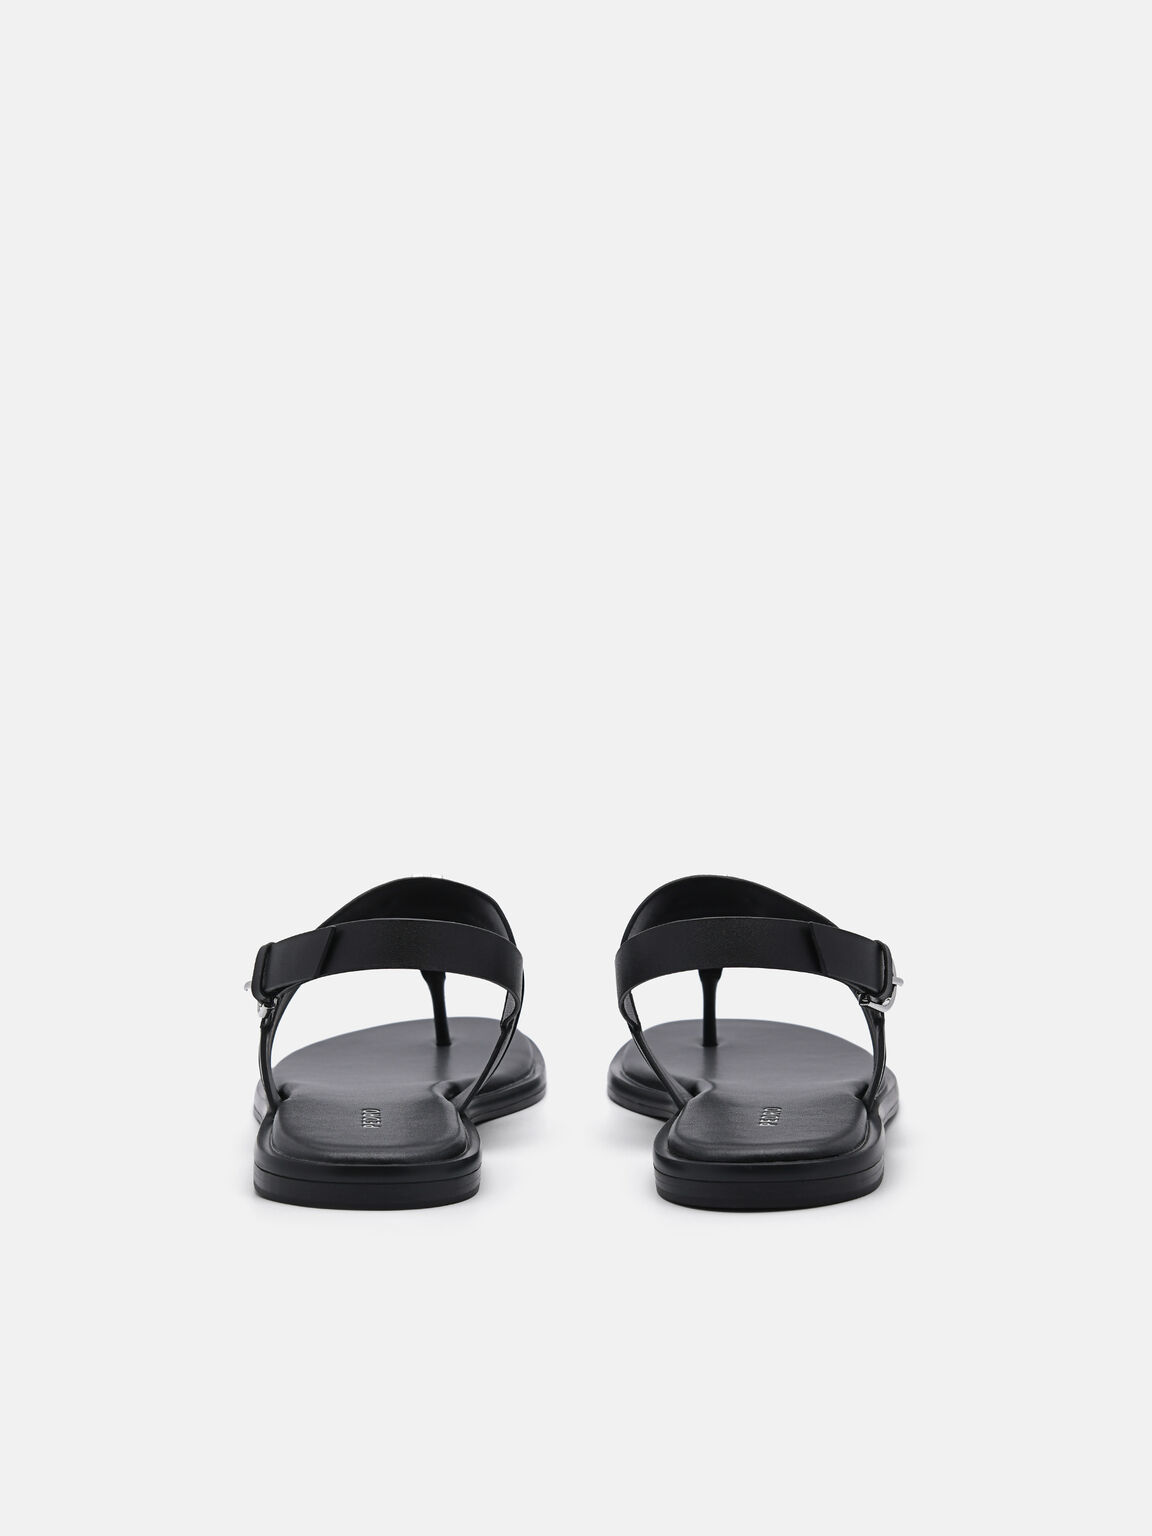 PEDRO Icon Leather Sandals, Black, hi-res